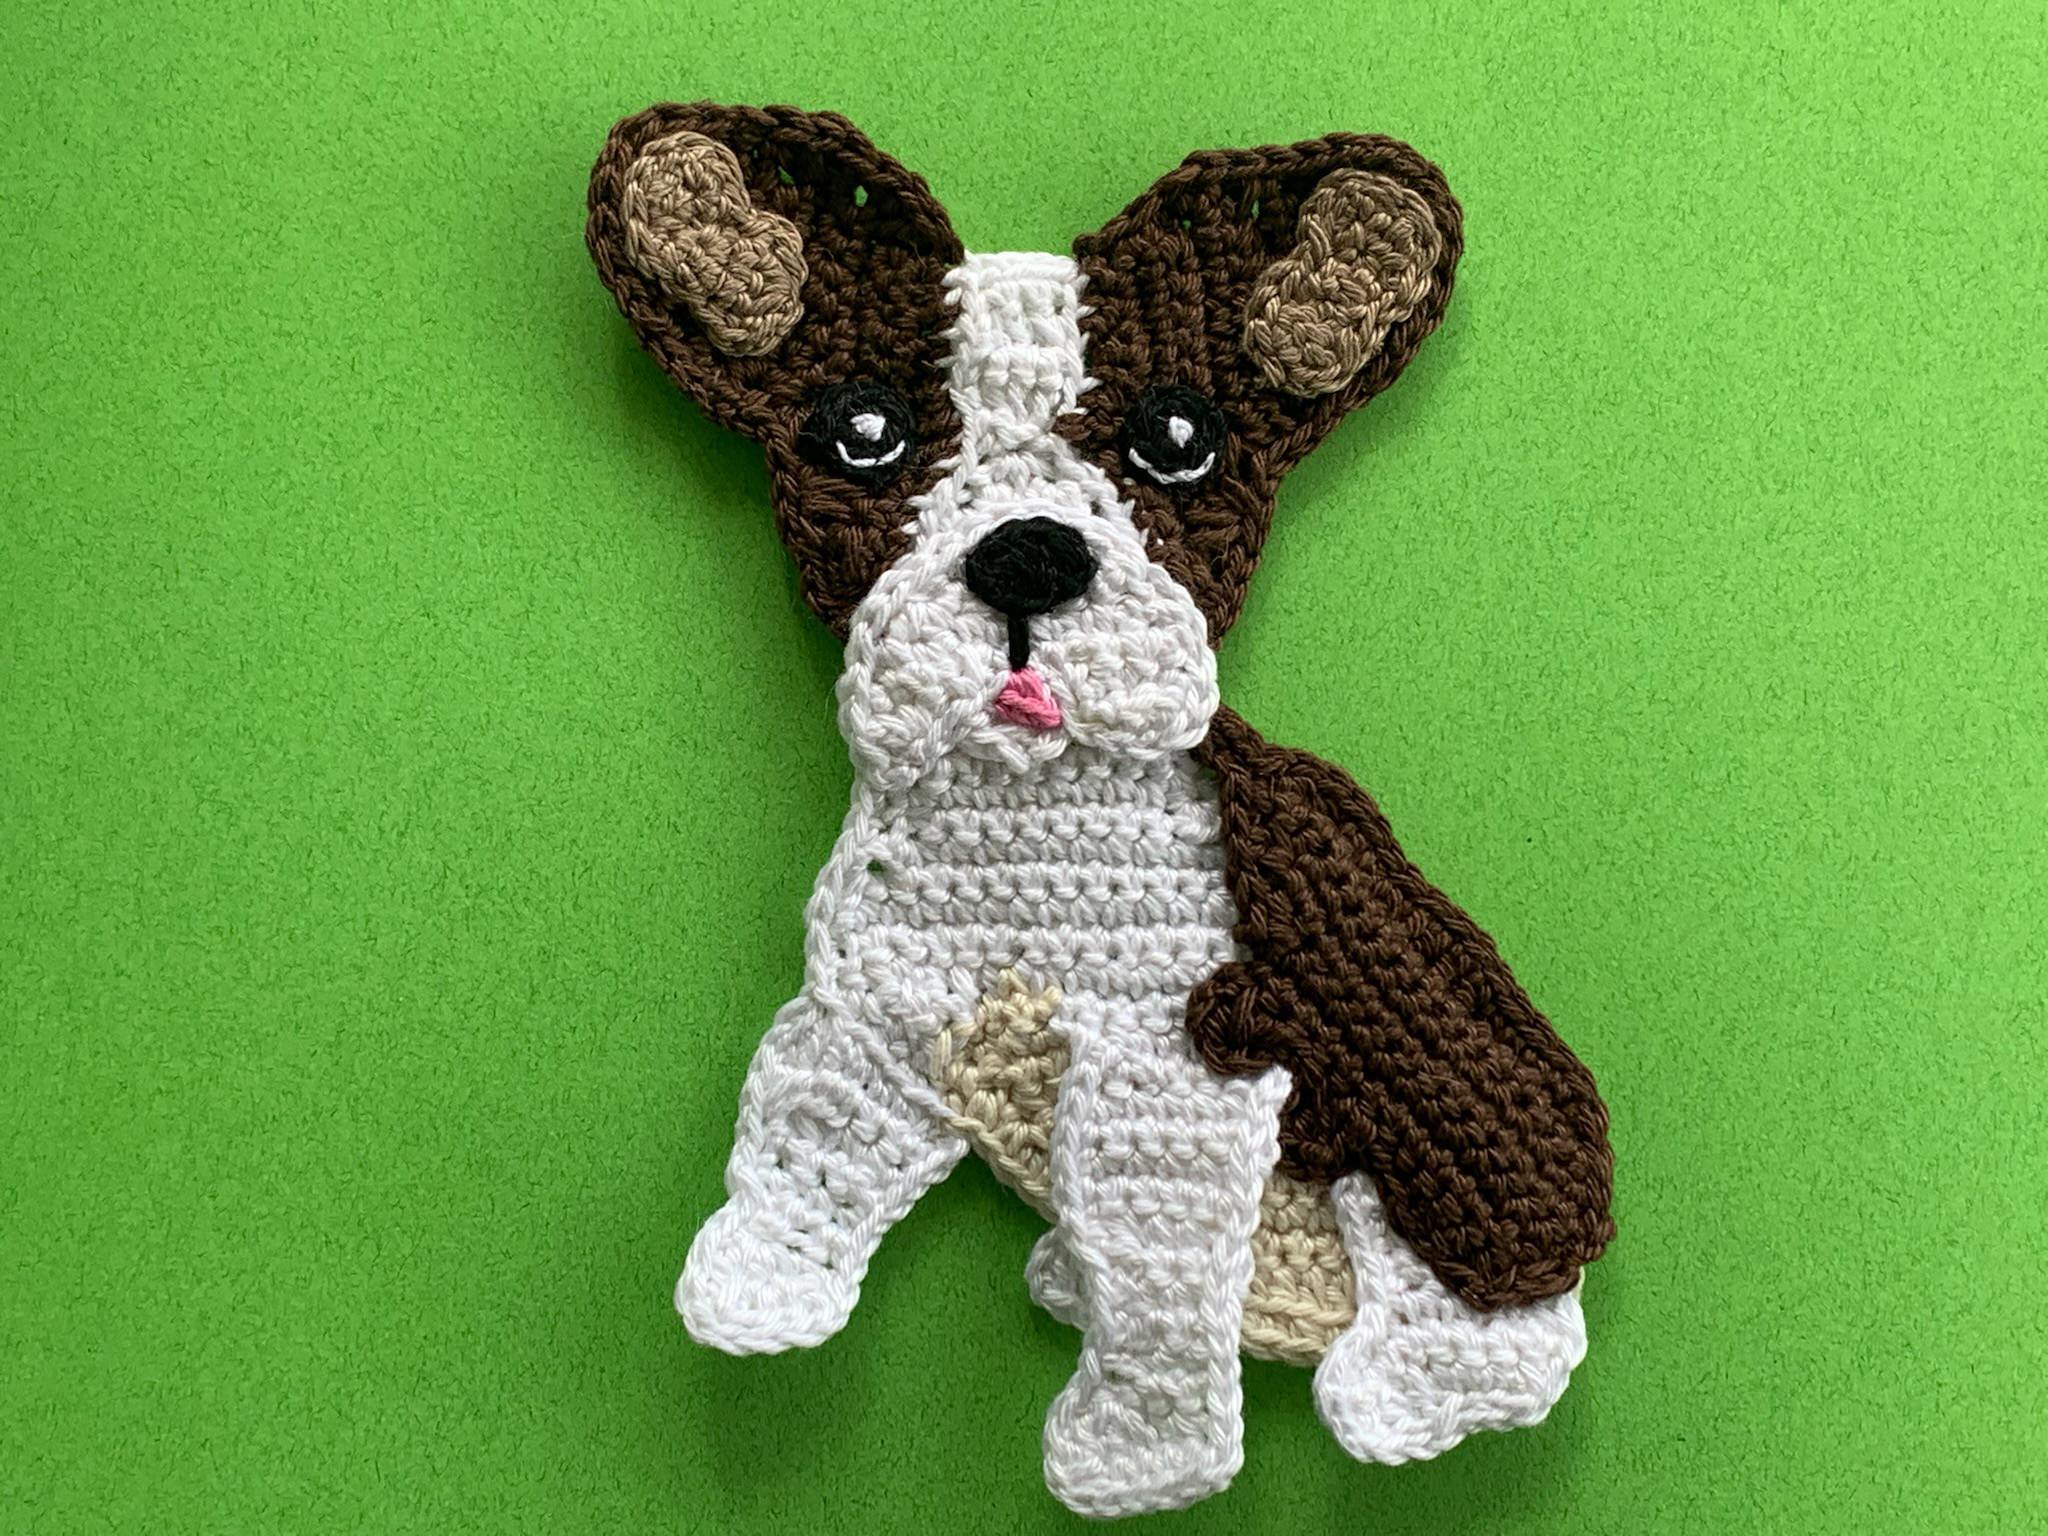 Finished crochet French bulldog 4 ply landscape